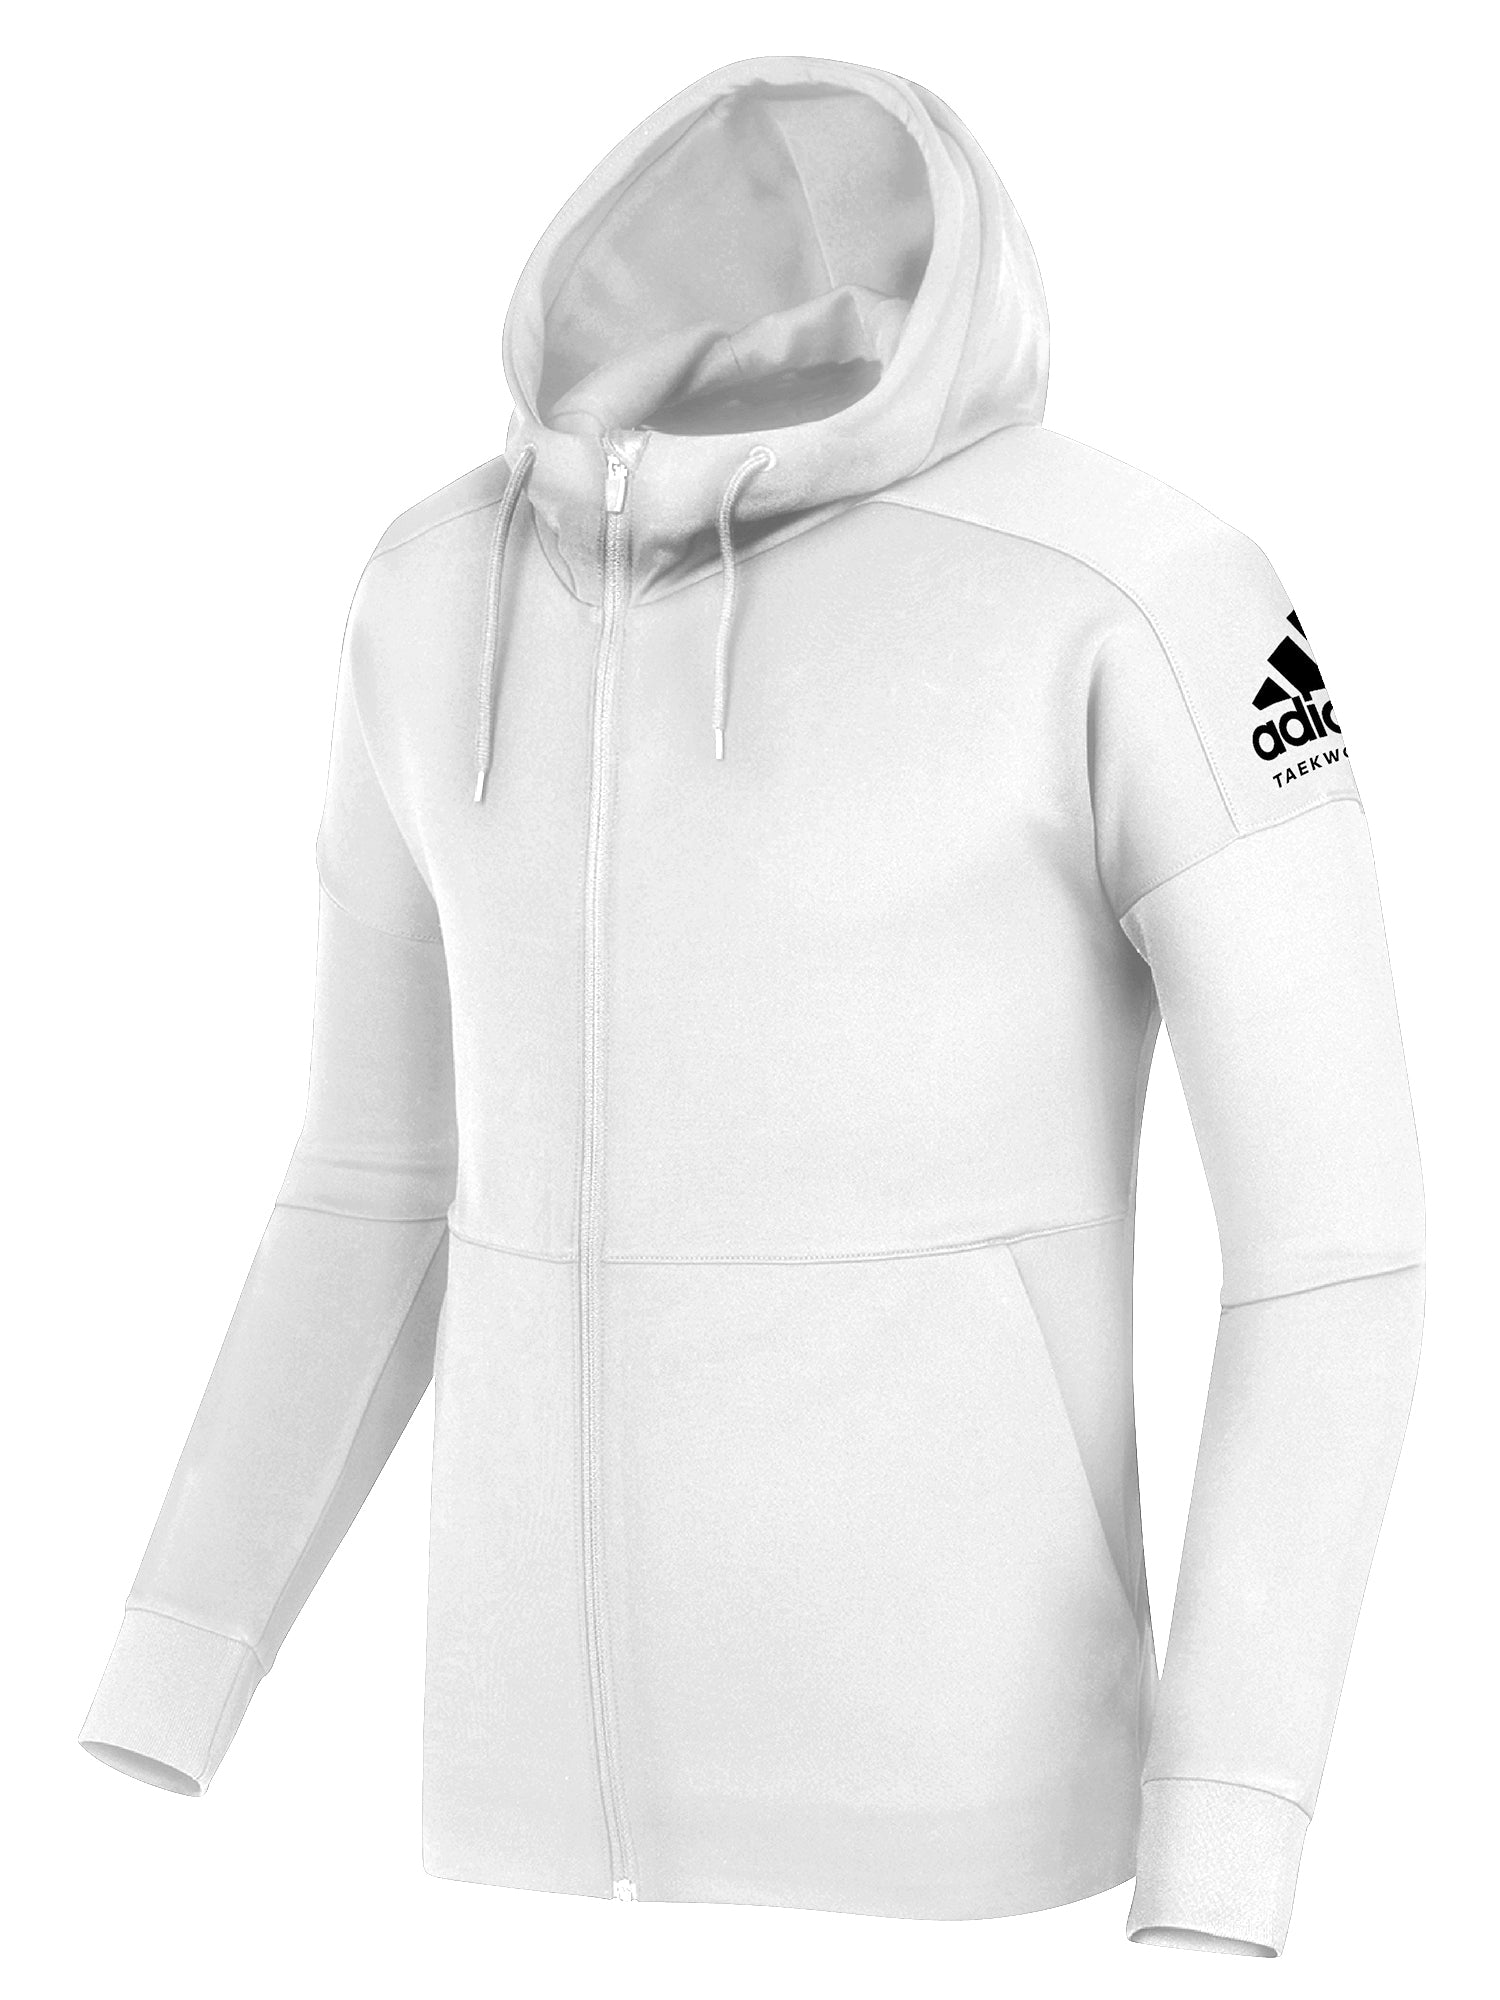 adidas Taekwondo Full Zipped All Jacket Martial Arts Fleece Hooded Sweatshirt American – Supply Lined